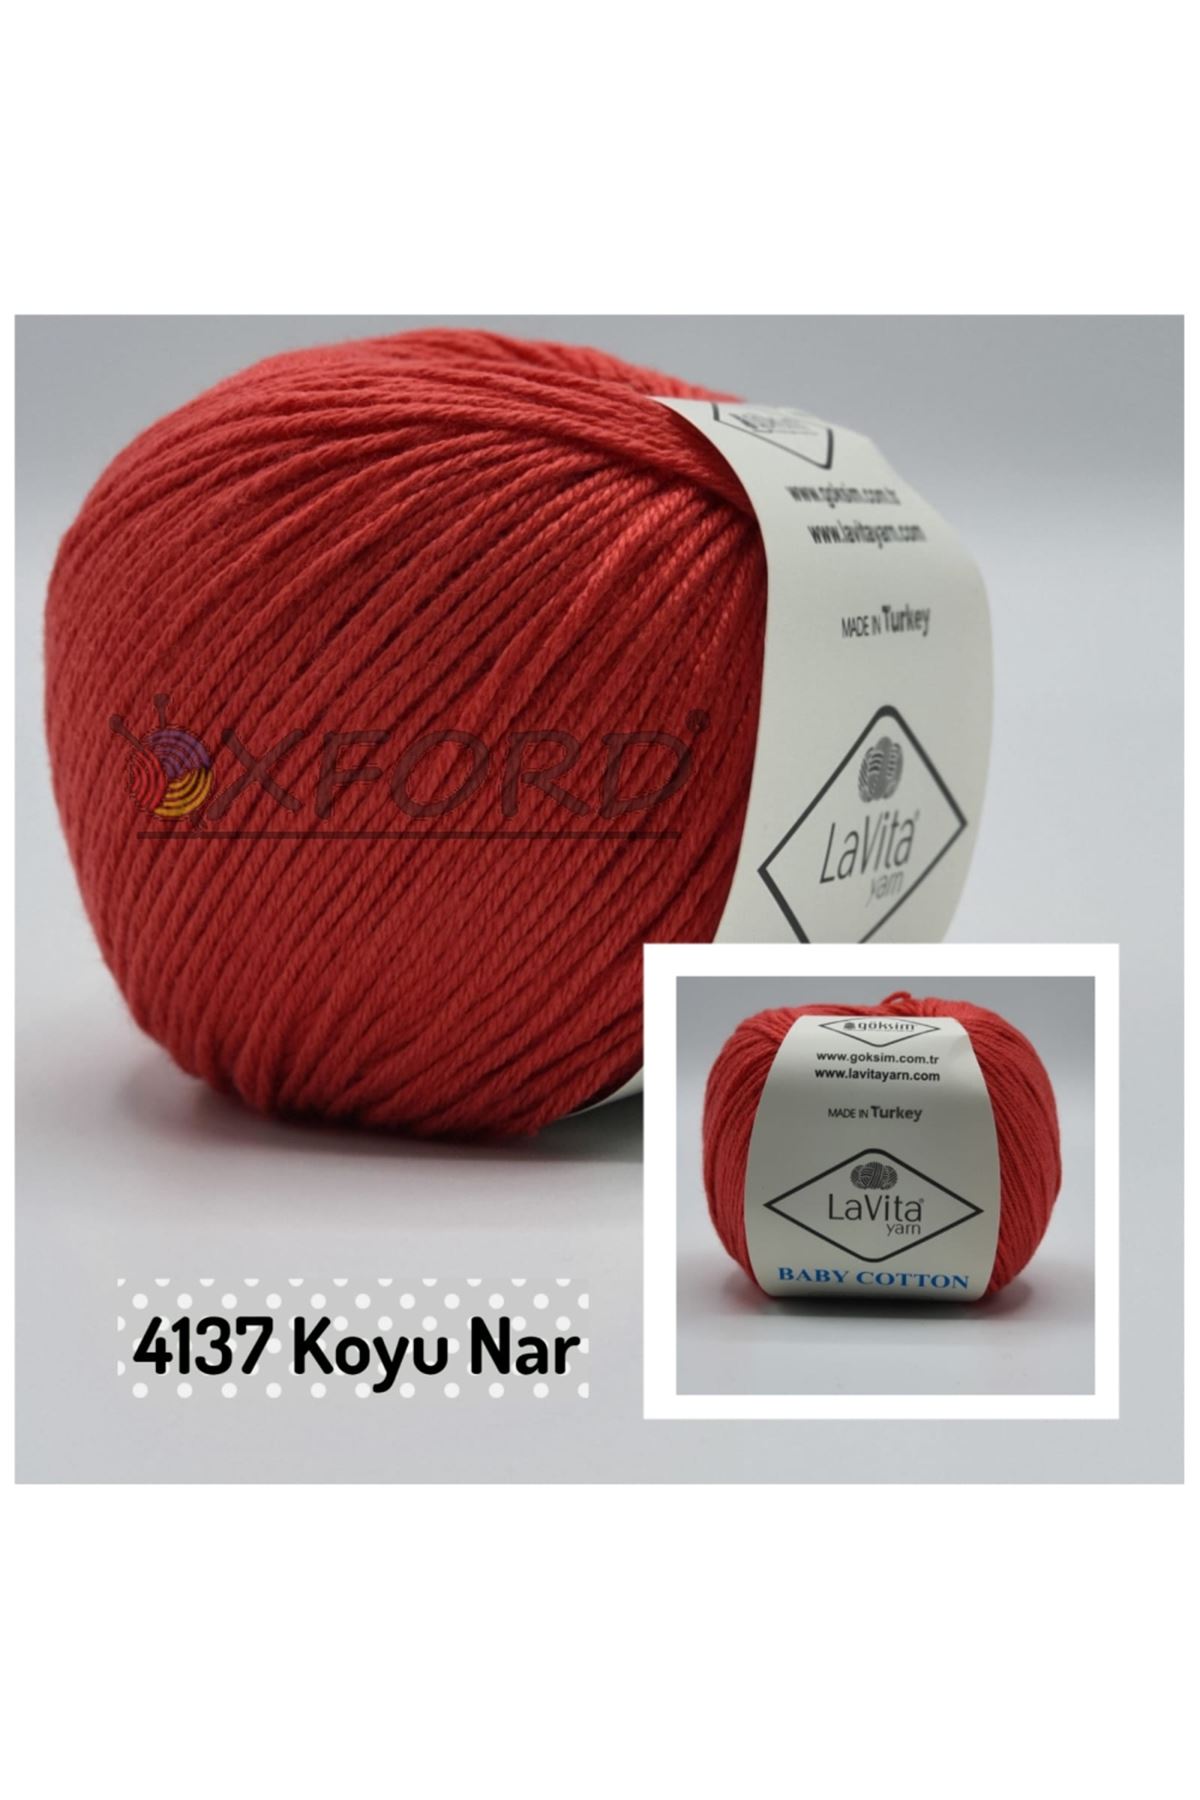 Lavita Baby Cotton 4137 Koyu Nar